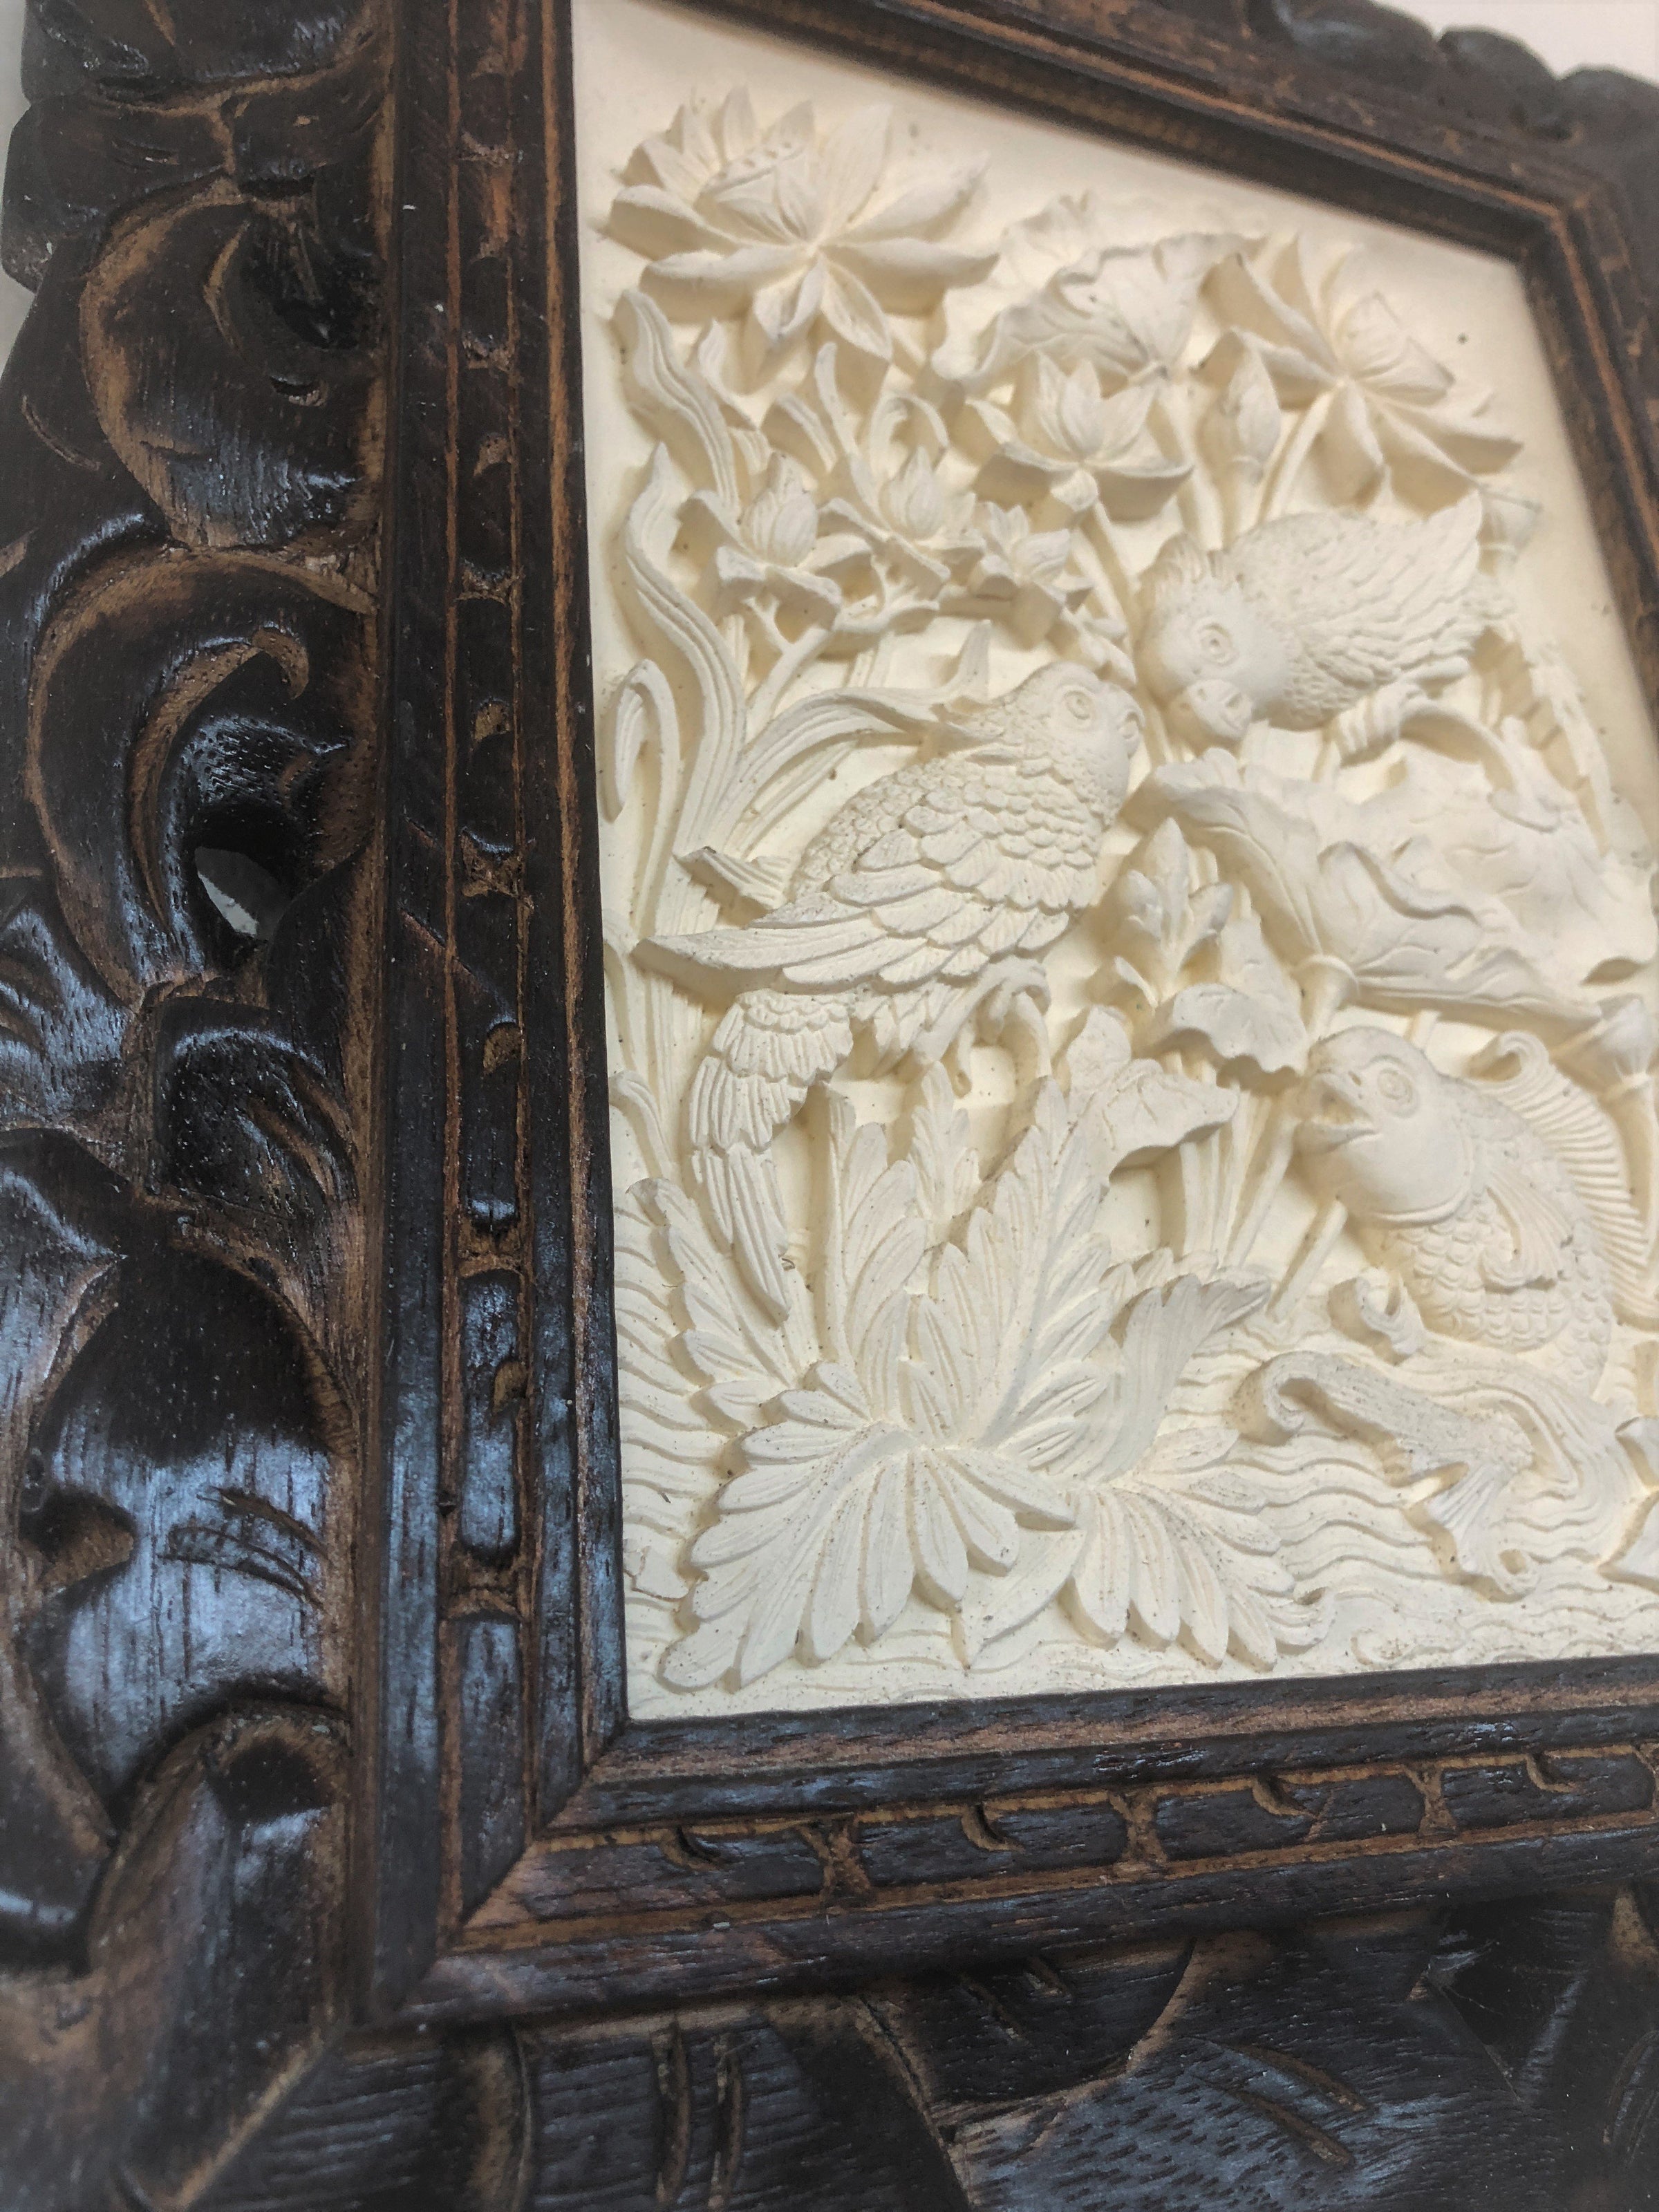 Carved Limestone Tile in wooden Frame